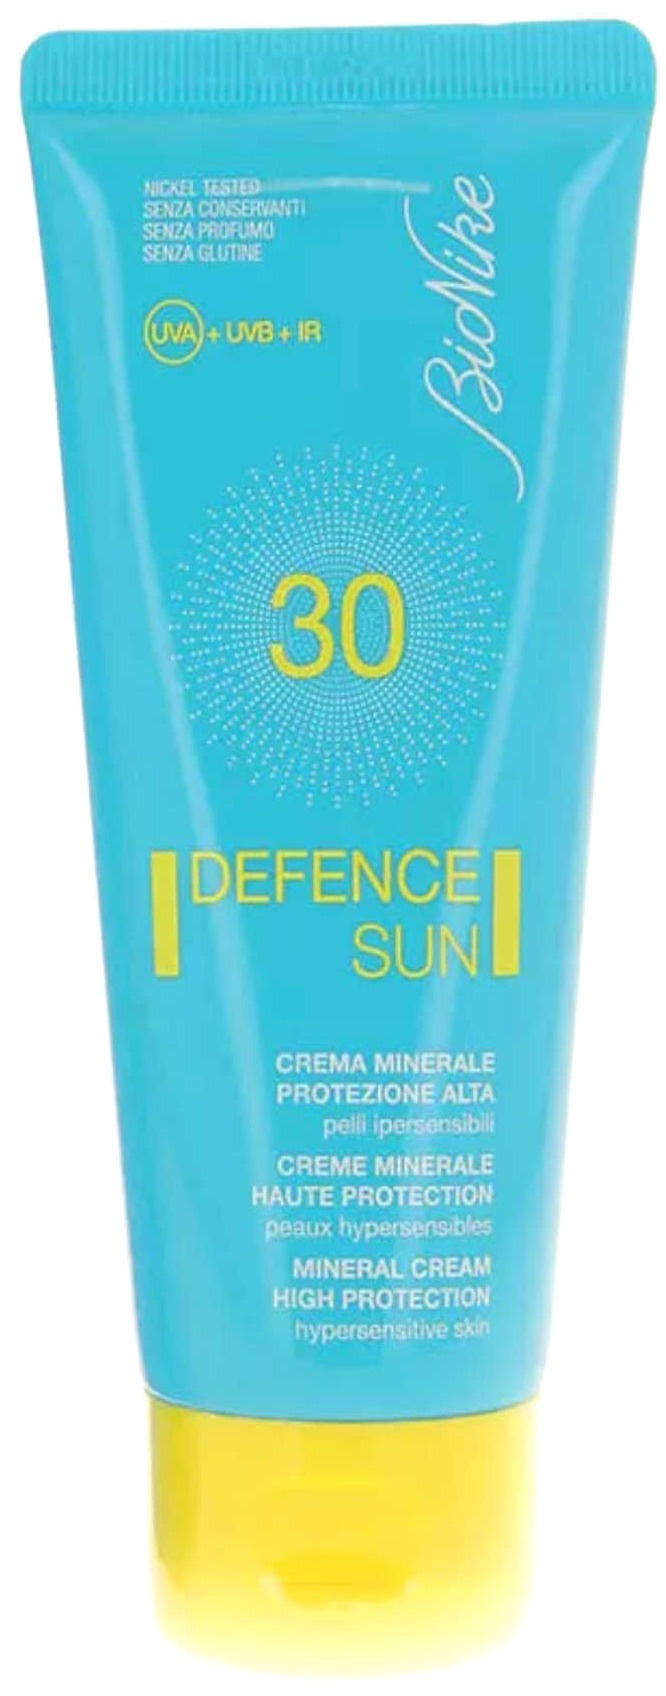 Bionike Defence Sun 30 Crema Minerale